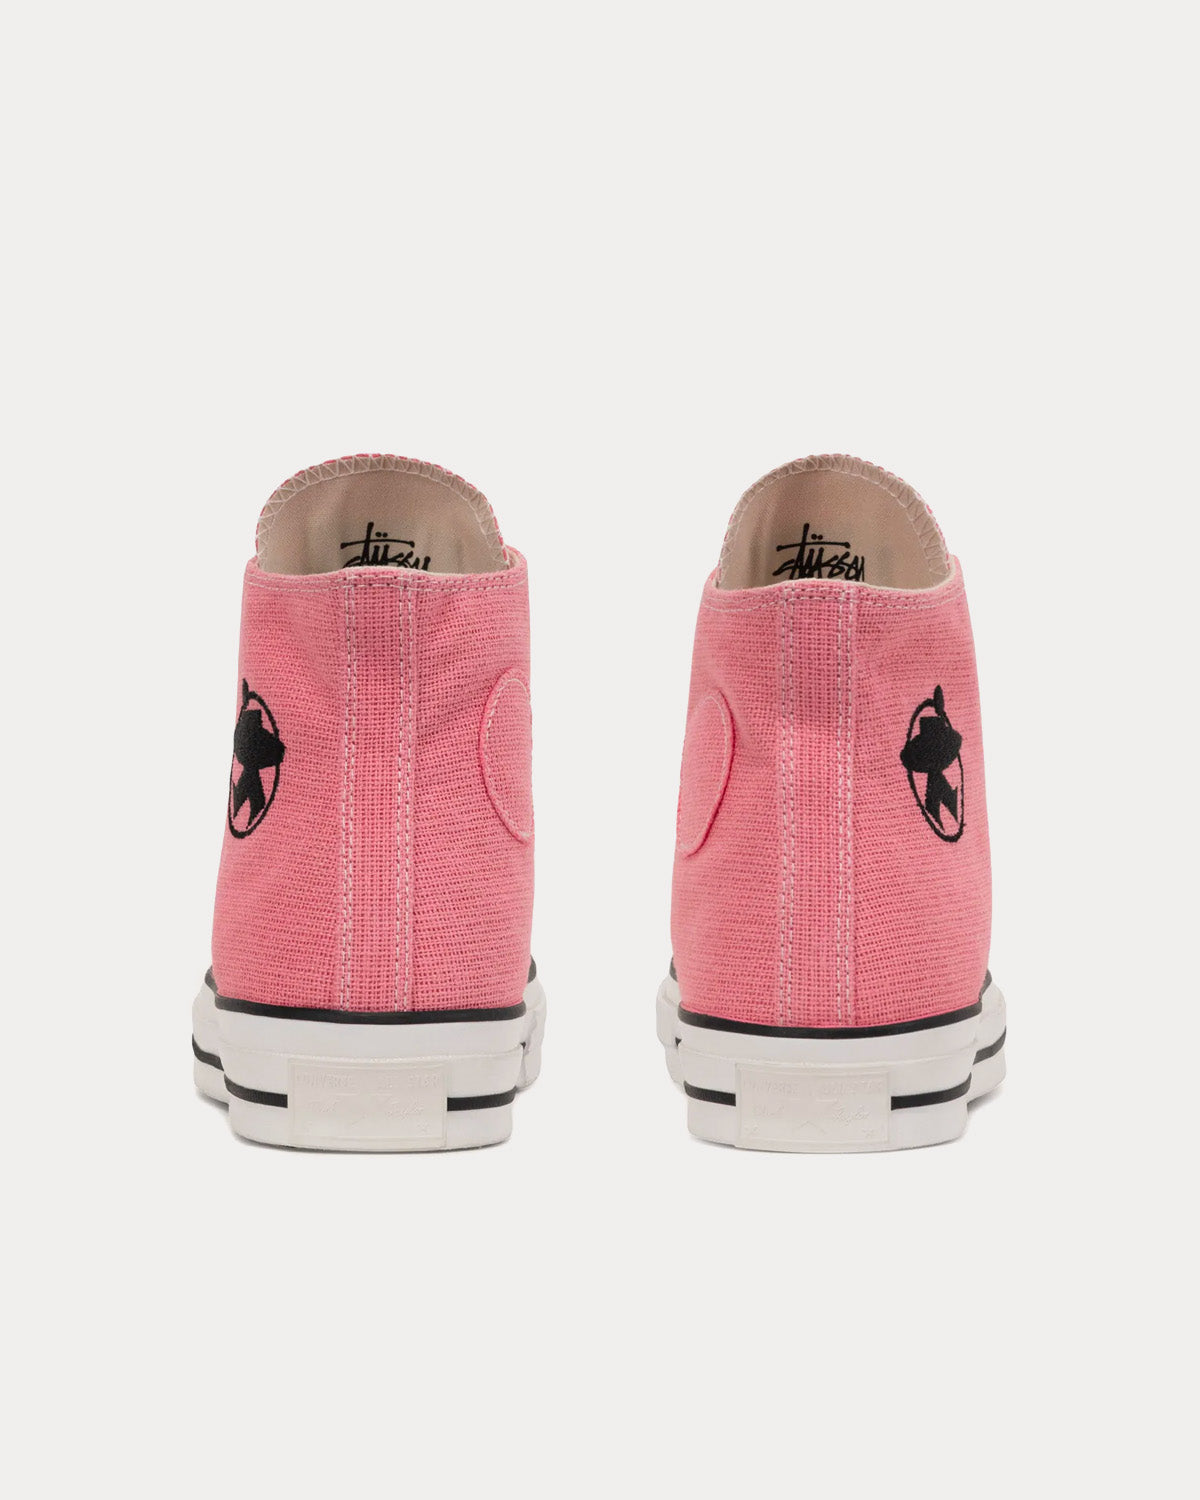 Converse x Stüssy Chuck 70 Hi Pink High Top Sneakers - Sneak in Peace